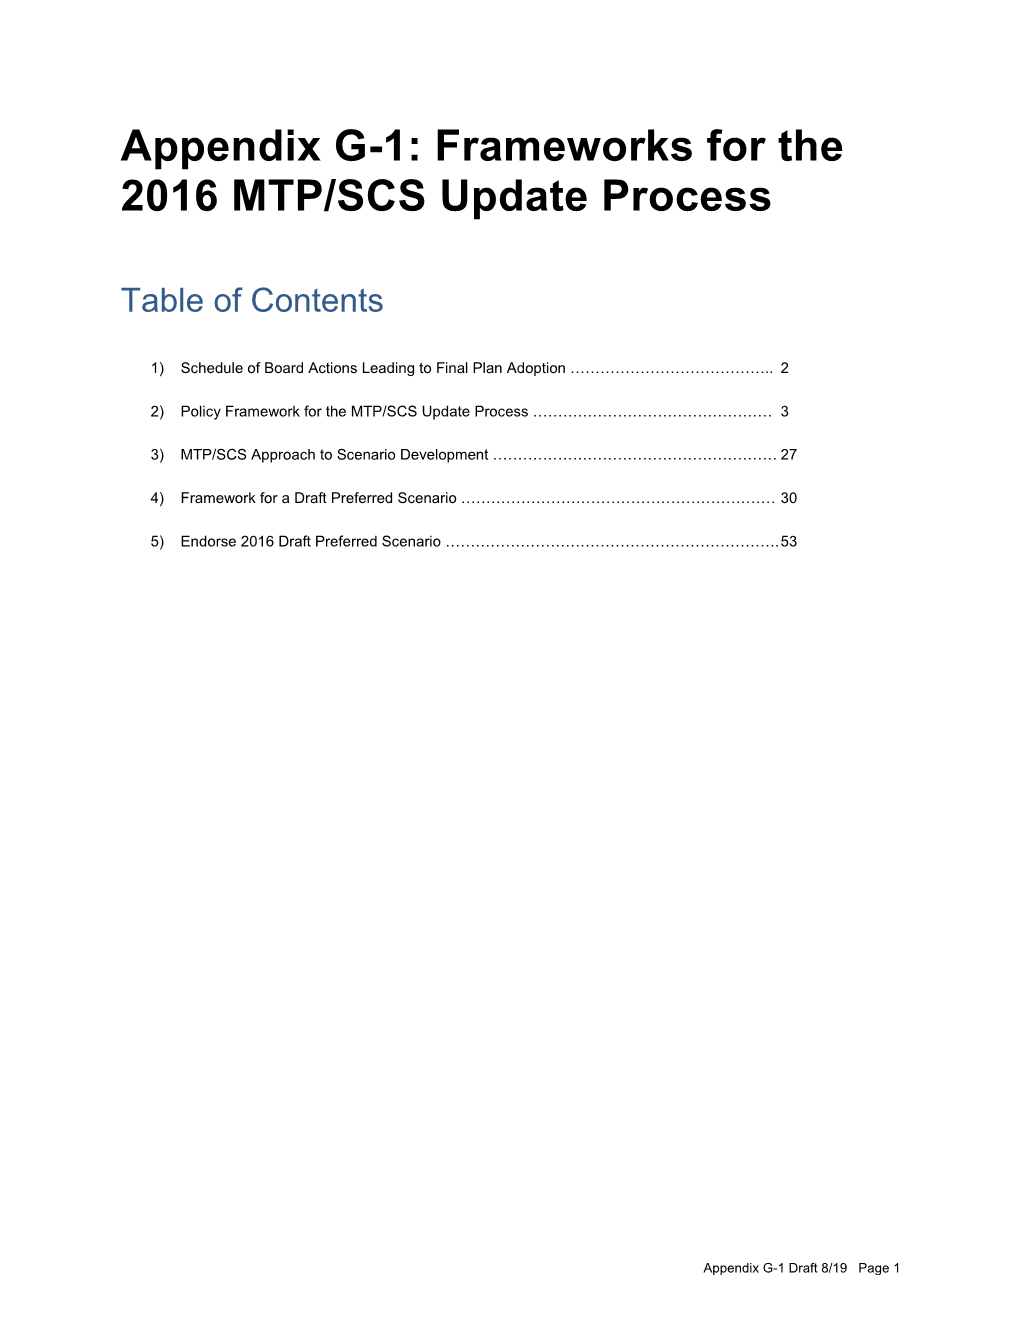 Appendix G-1: Frameworks for the 2016 MTP/SCS Update Process